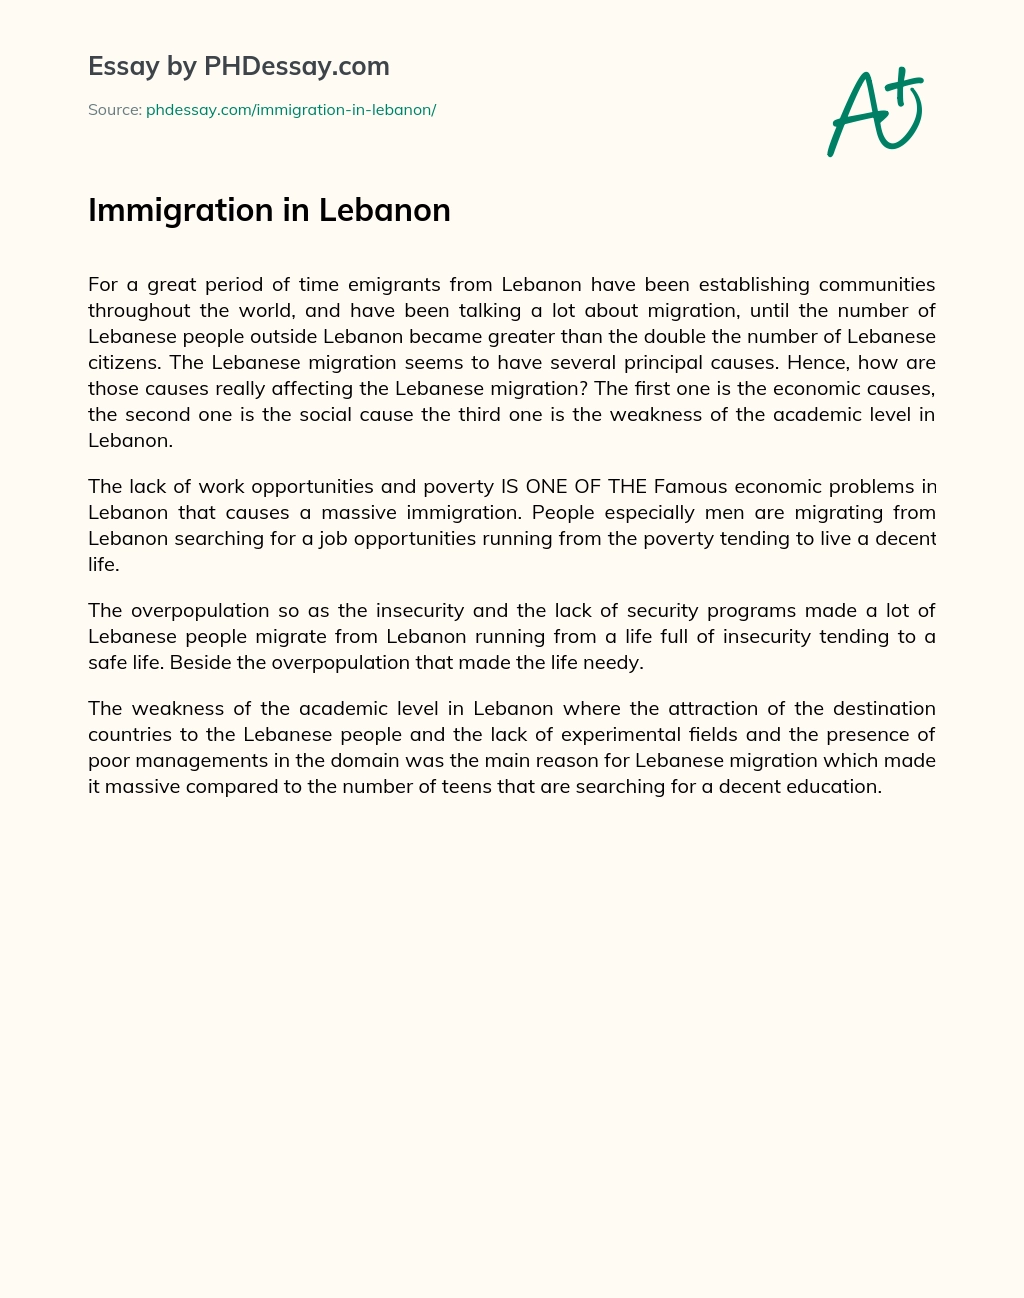 Immigration in Lebanon essay